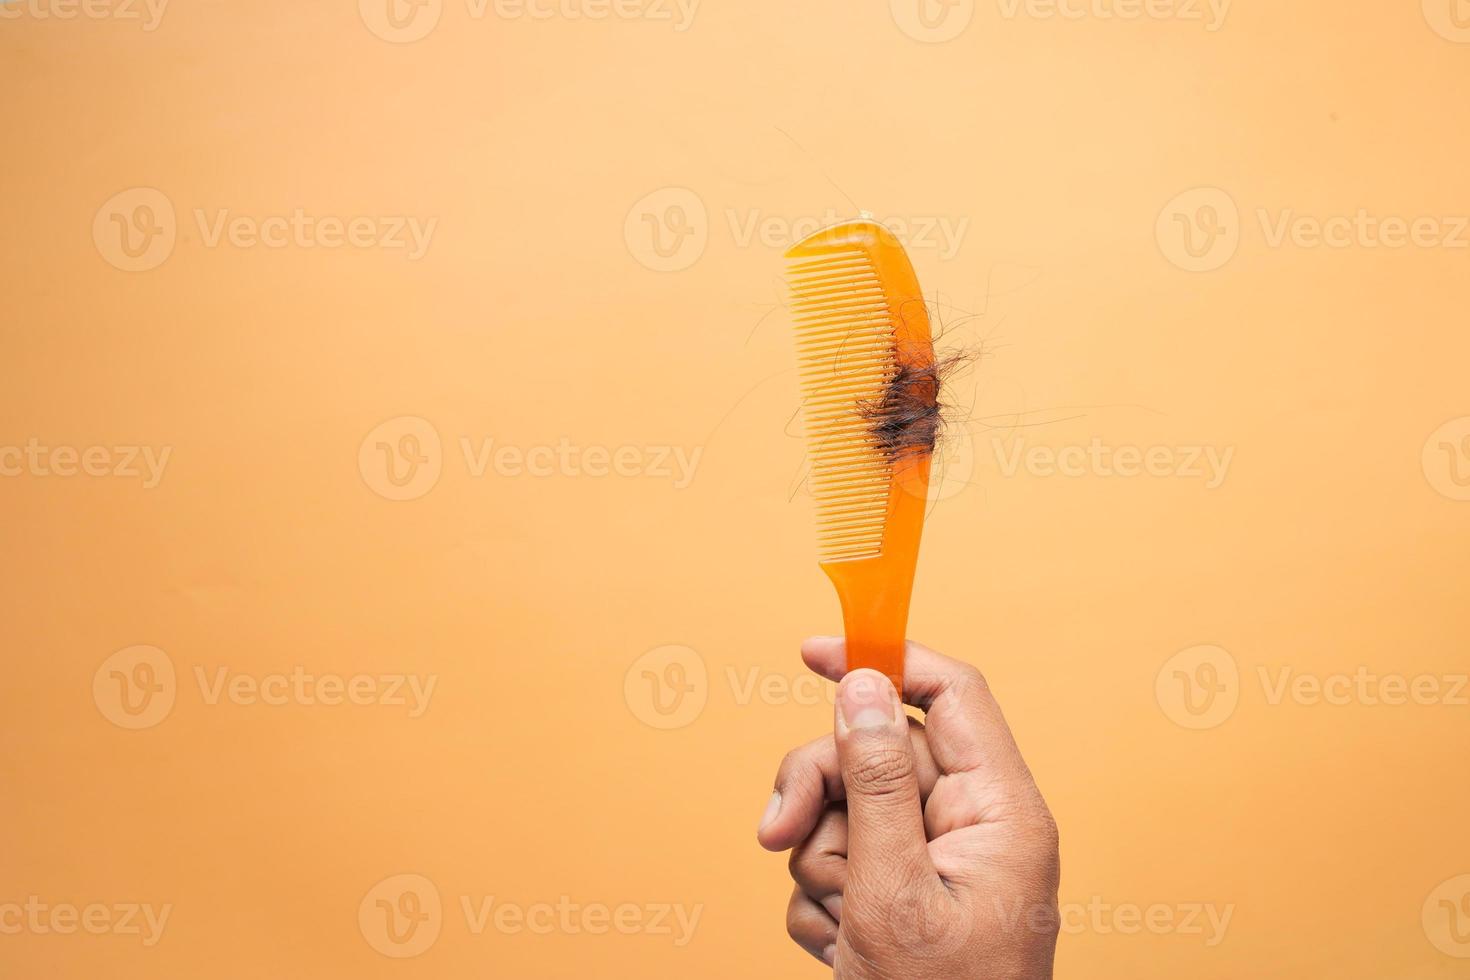 Haarausfall in orangefarbenem Kamm, Haarausfall im Alltag, ernstes Problem, foto